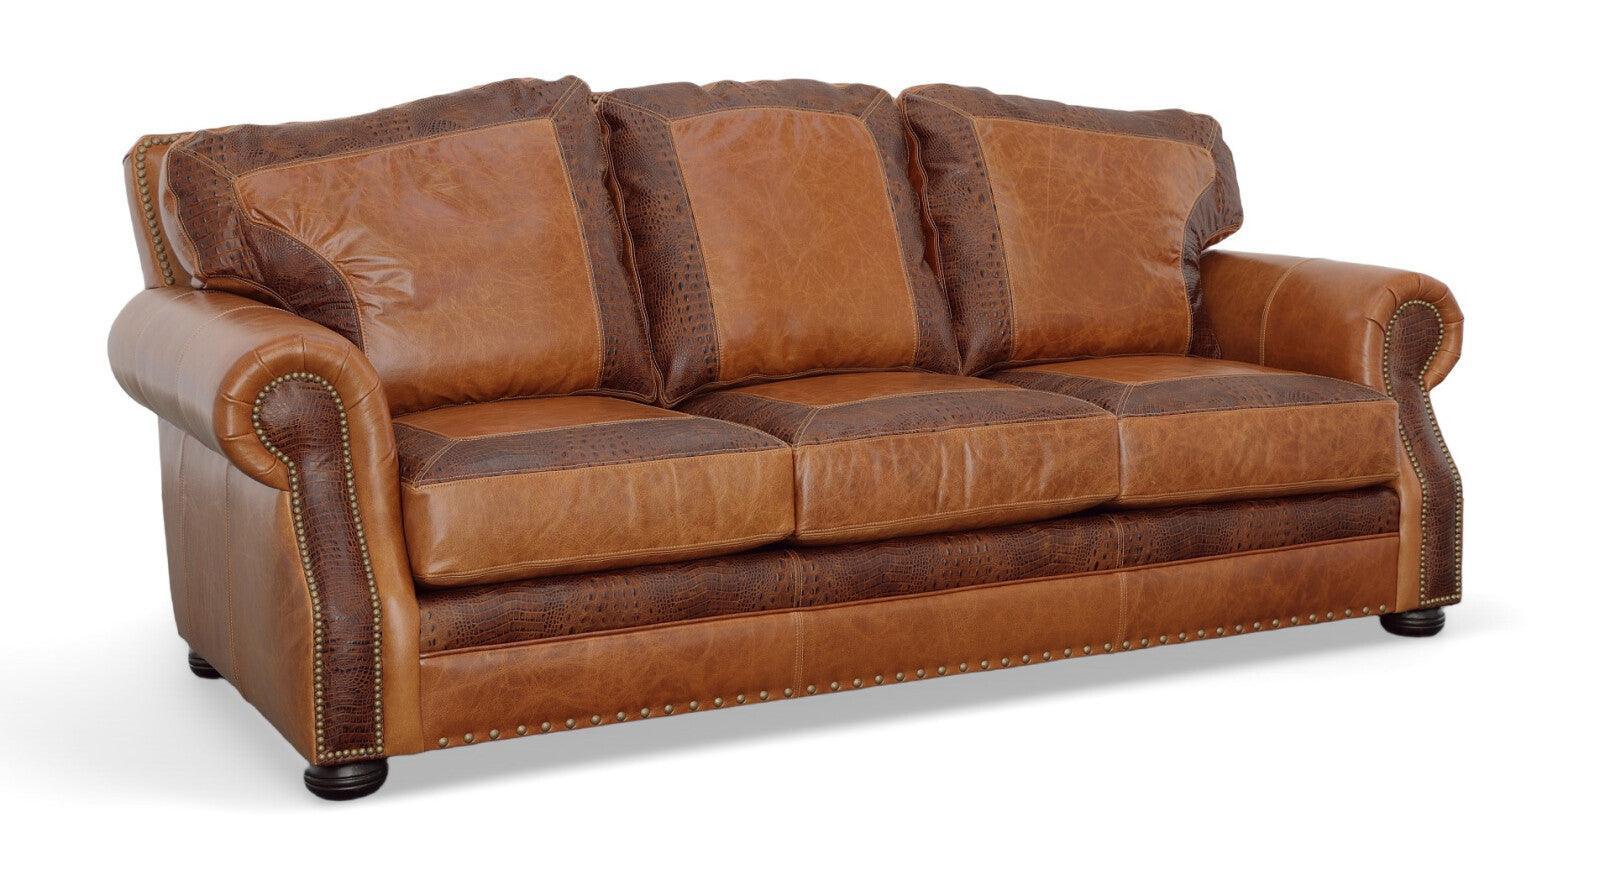 Golden Luxury - California Custom Leather Couch - Uptown Sebastian